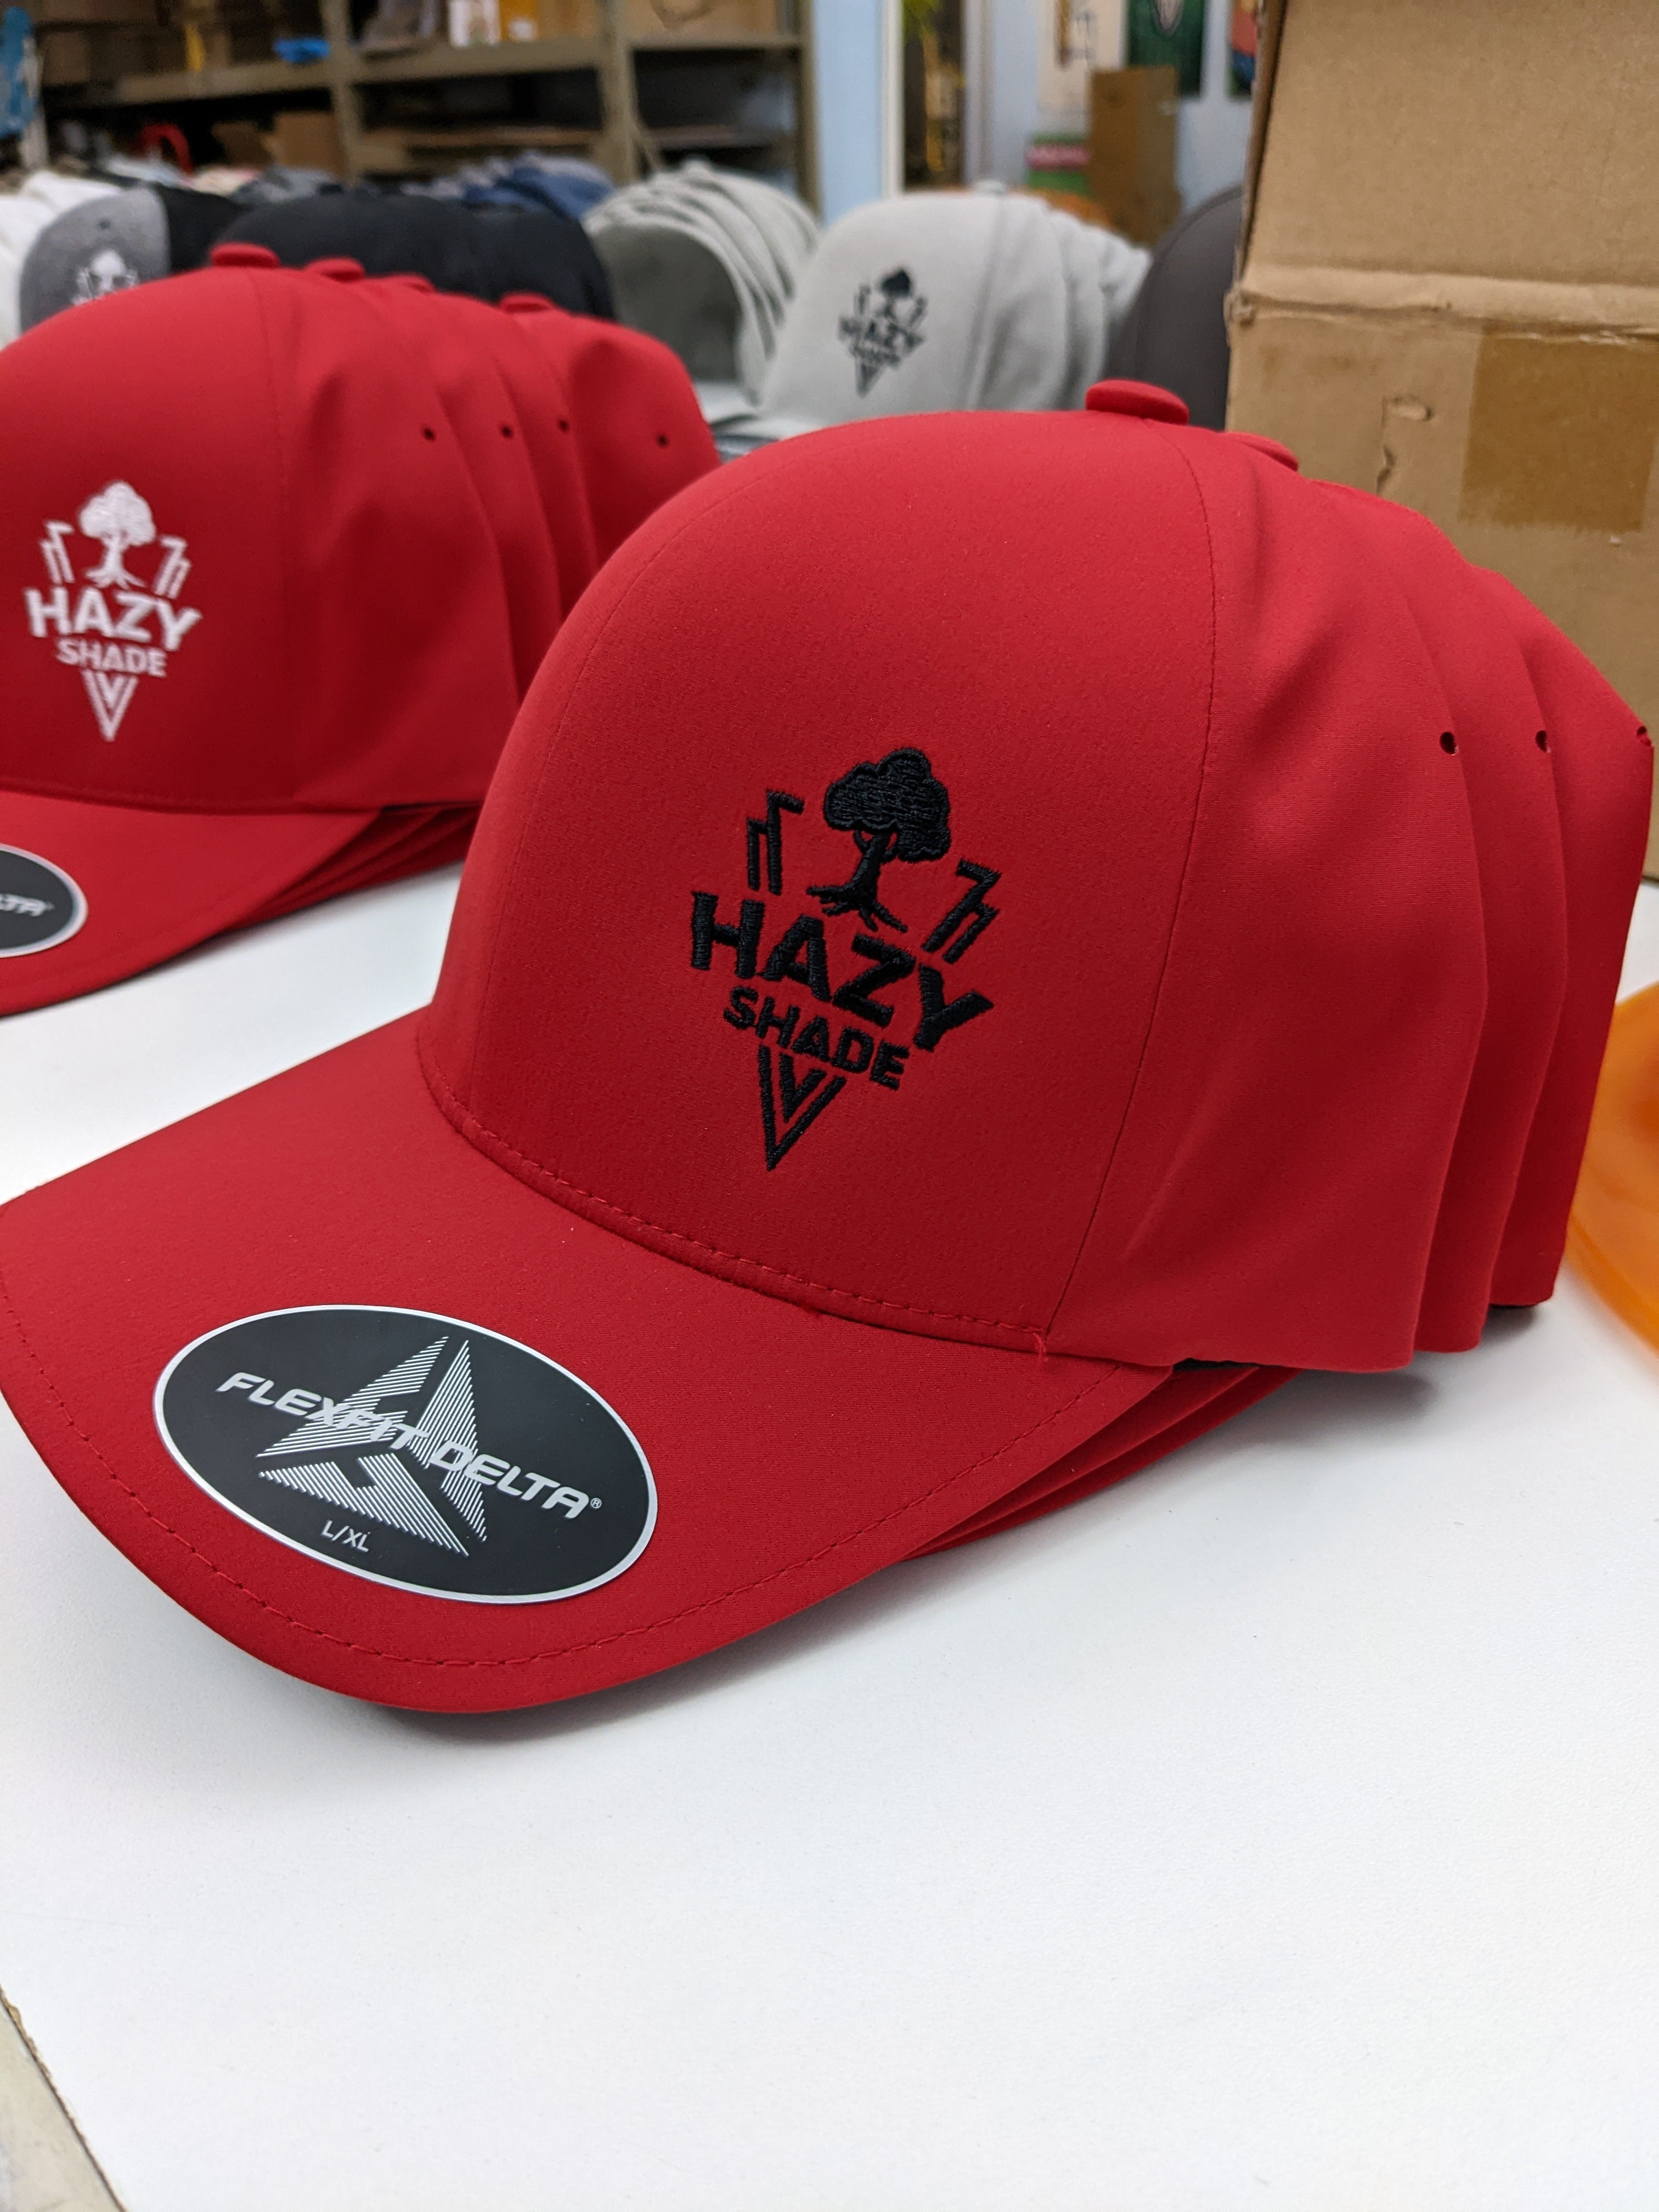 Hazy Shade Flexfit Delta L/XL Hat Triangle Red-Black